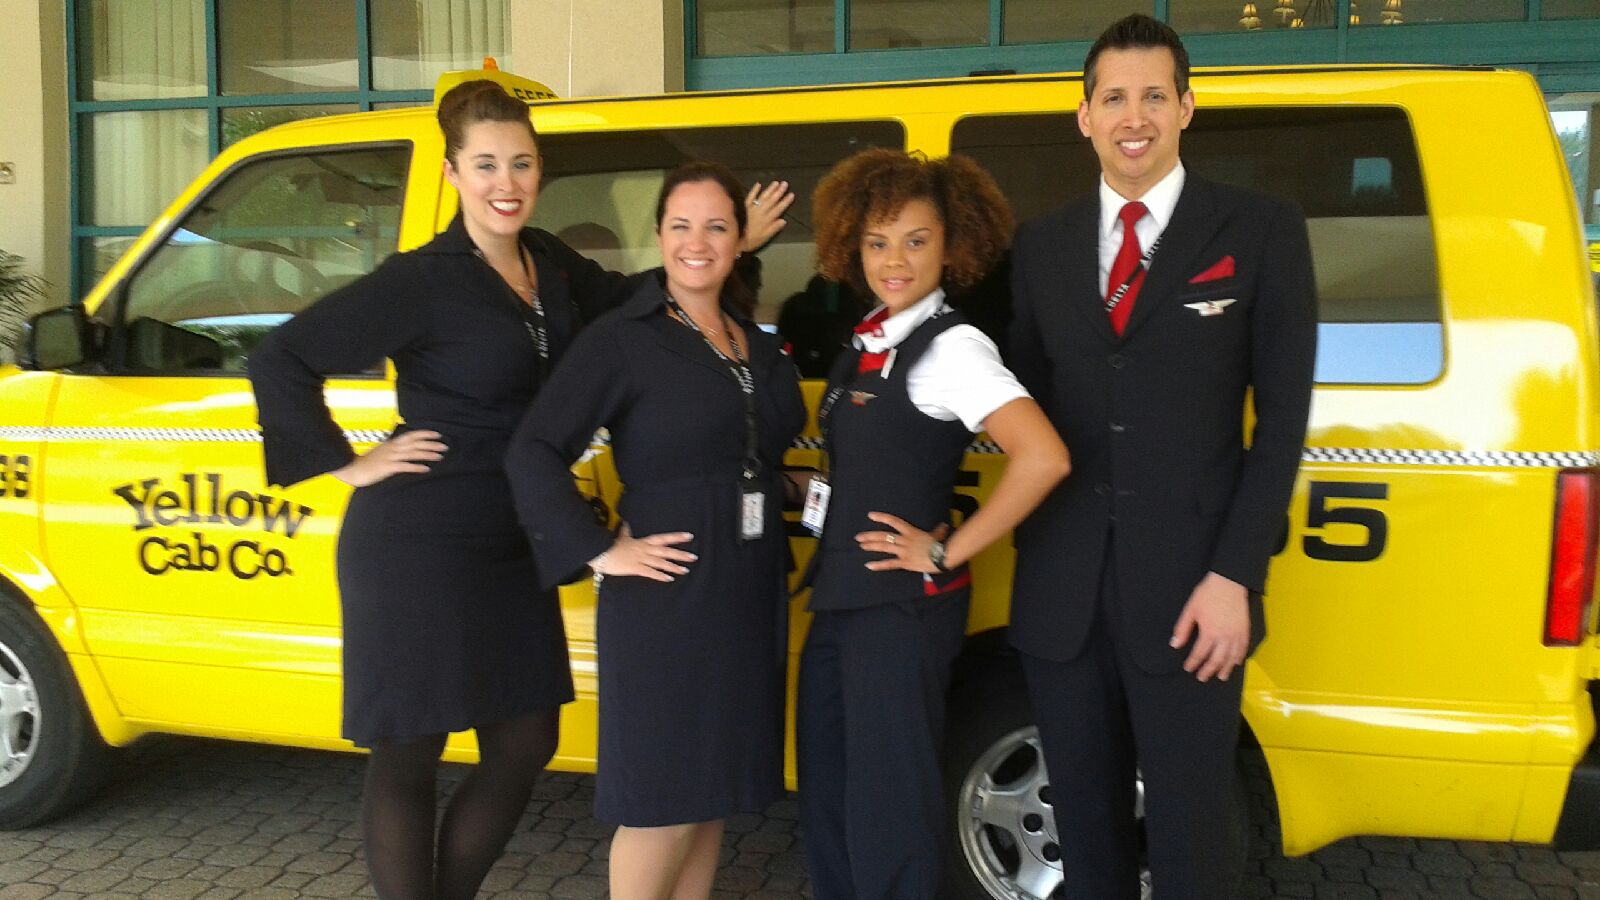 Delta Airlines pilots & crew choose Daytona Beach taxi service Yellow Cab Co.